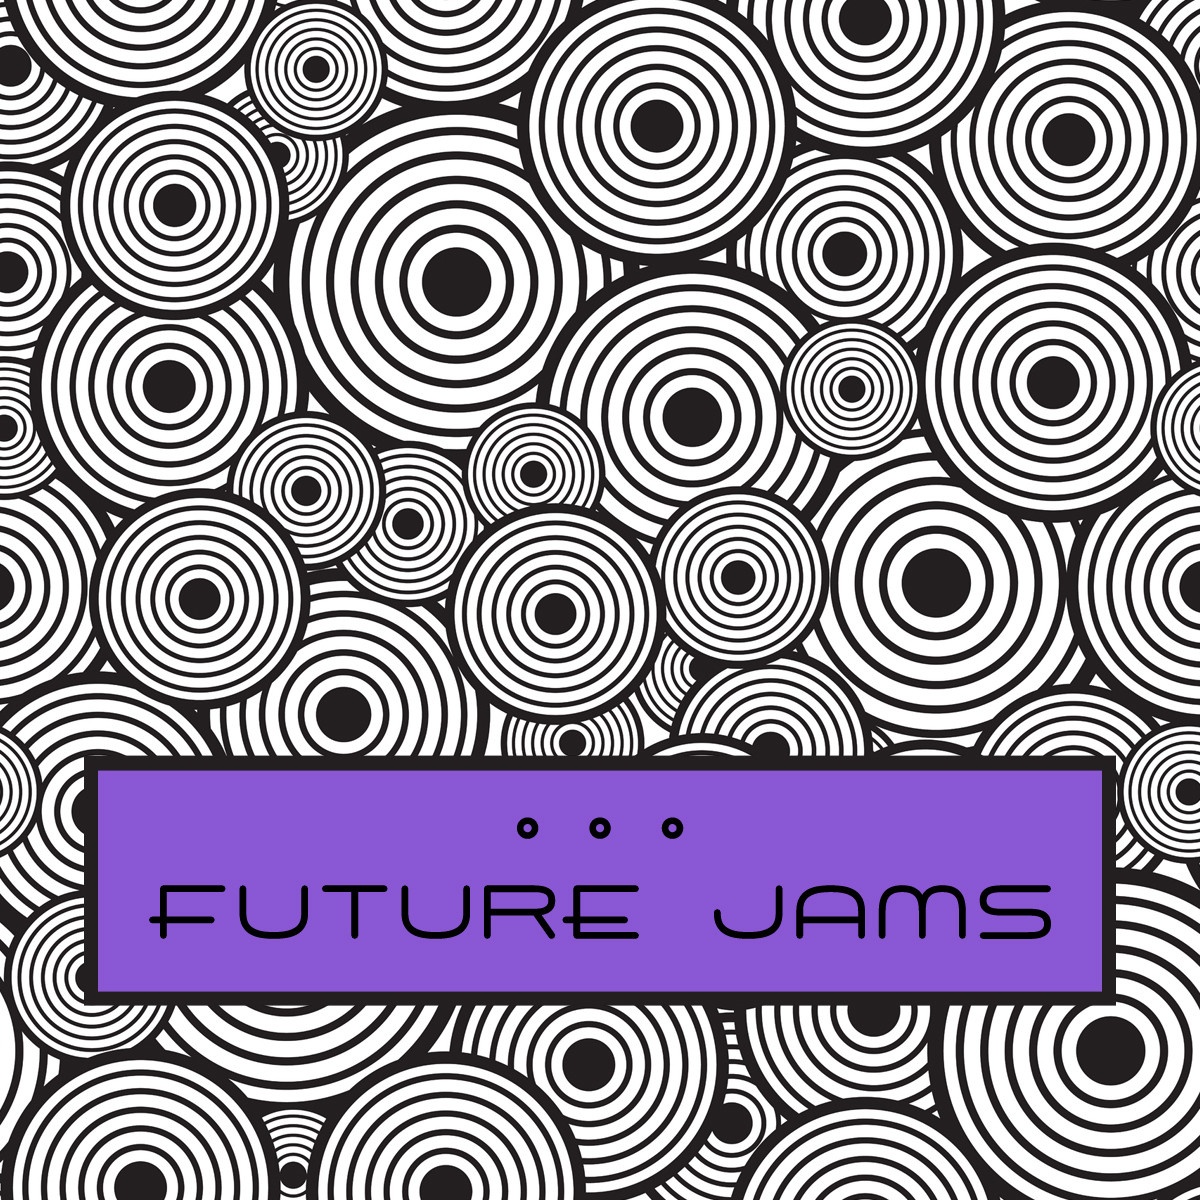 Future Jams